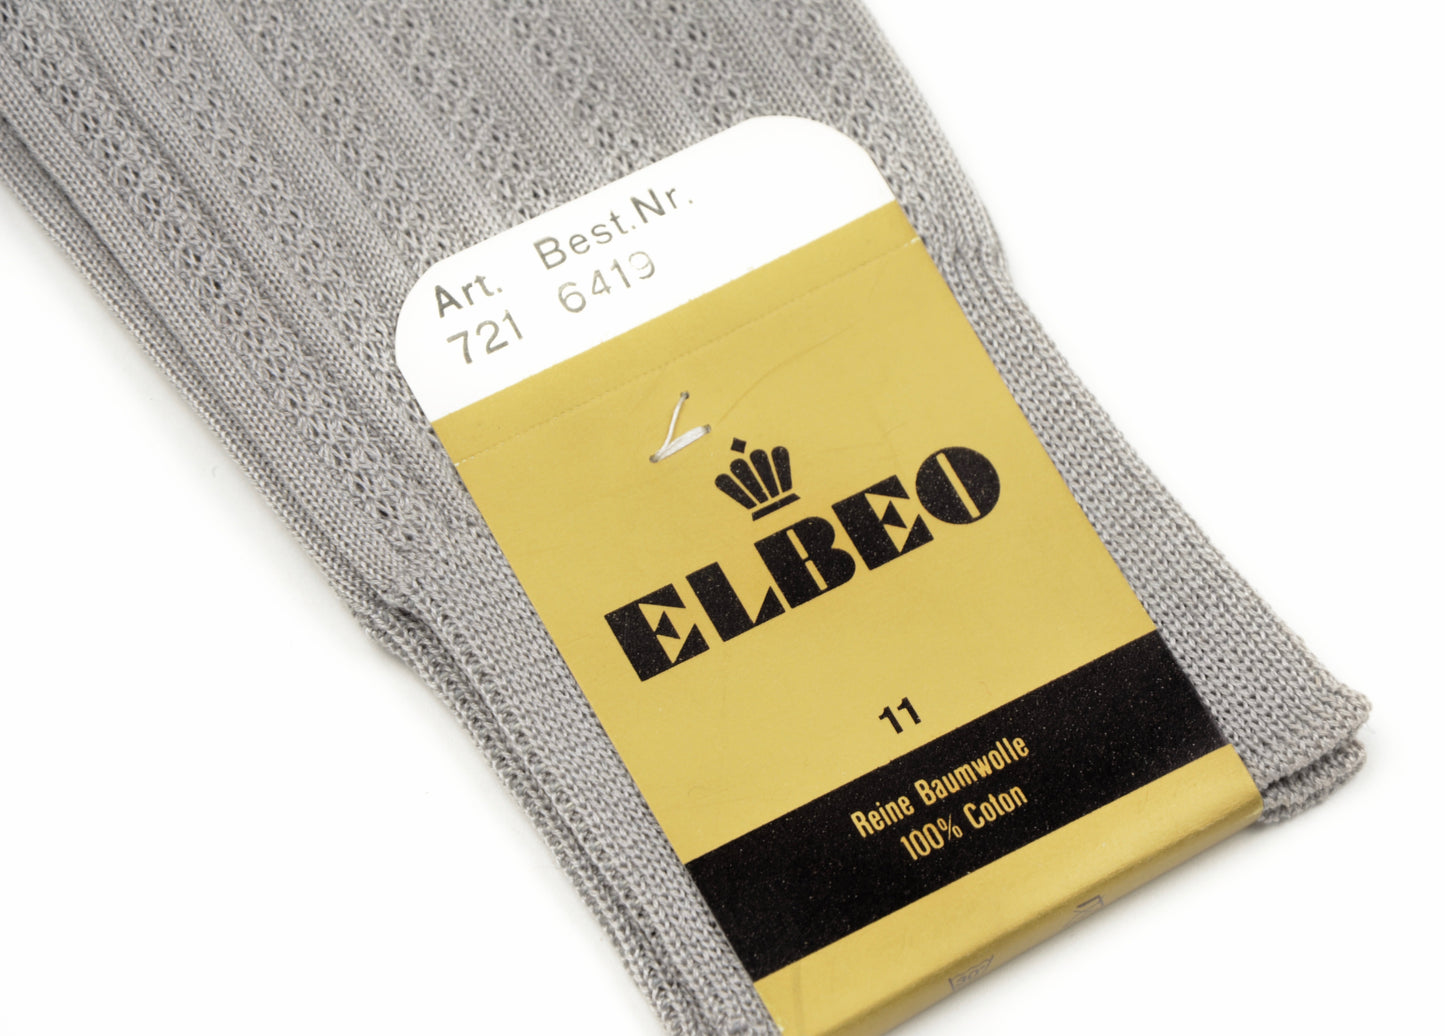 NOS Elbeo Cotton Socks Size 11  - Light Grey